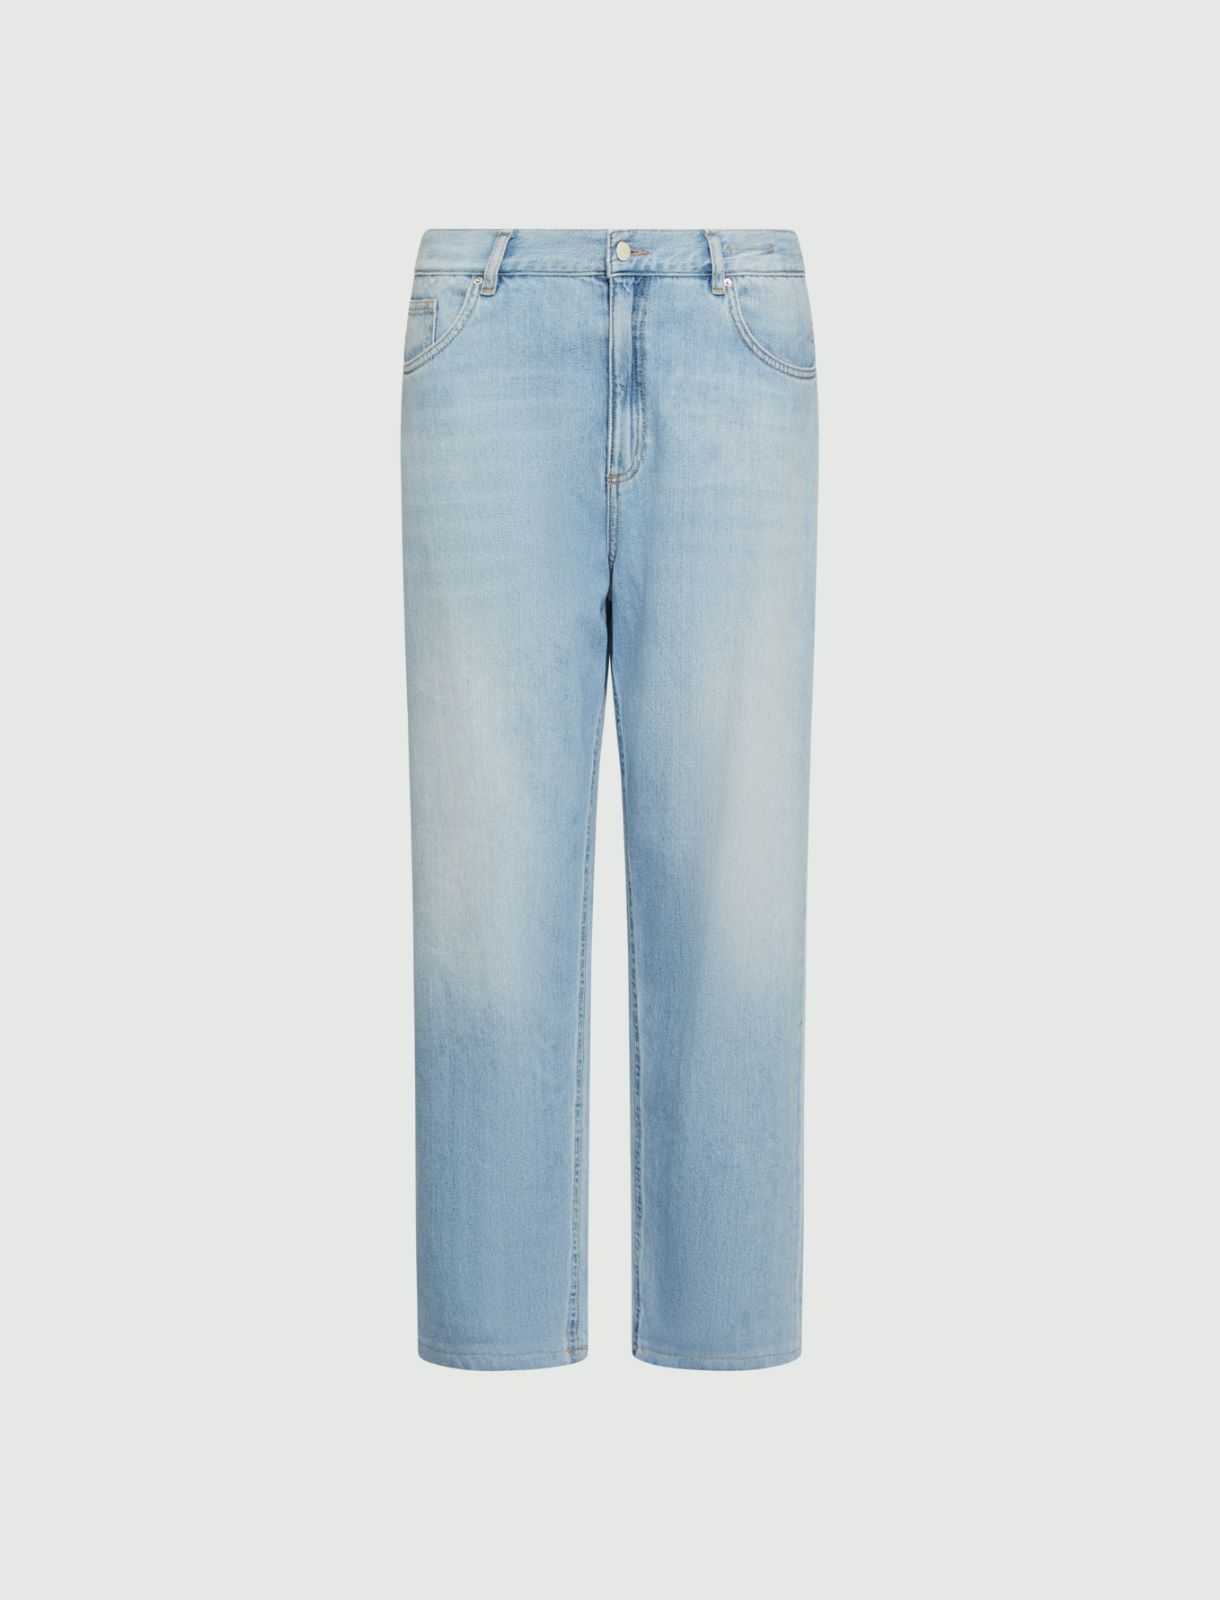 Tomboy jeans - Blue jeans - Marella - 6